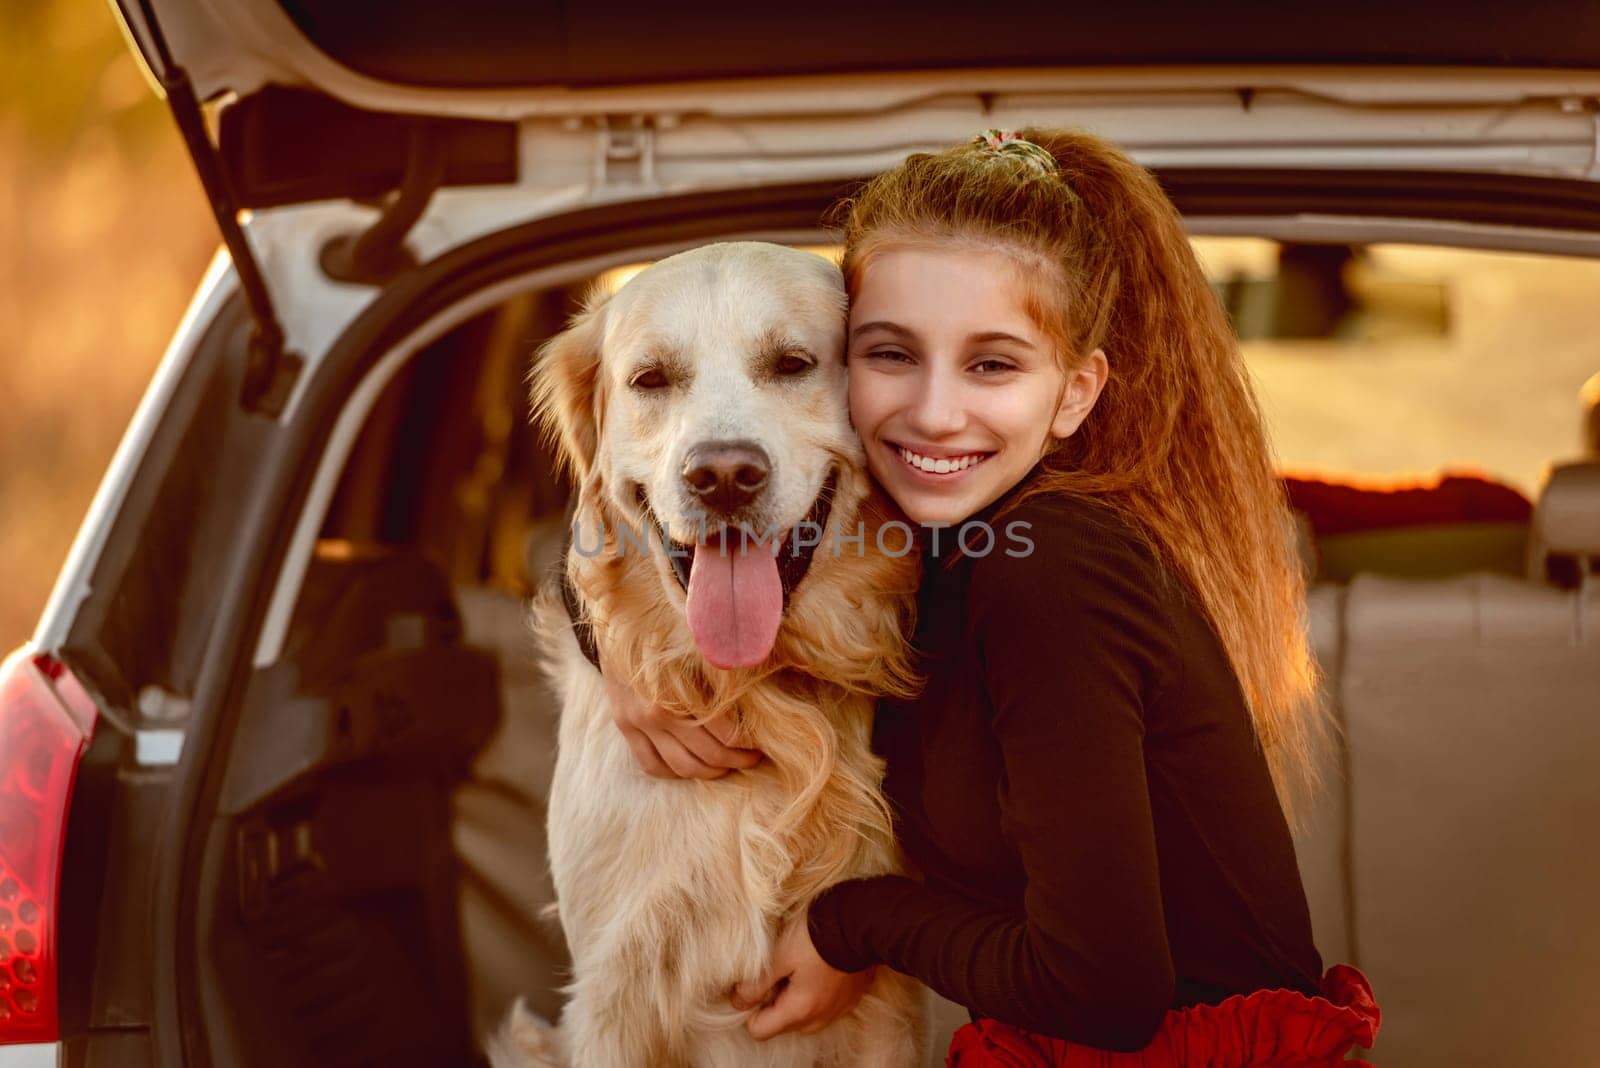 Teenage girl hugging dog in car trunk by tan4ikk1